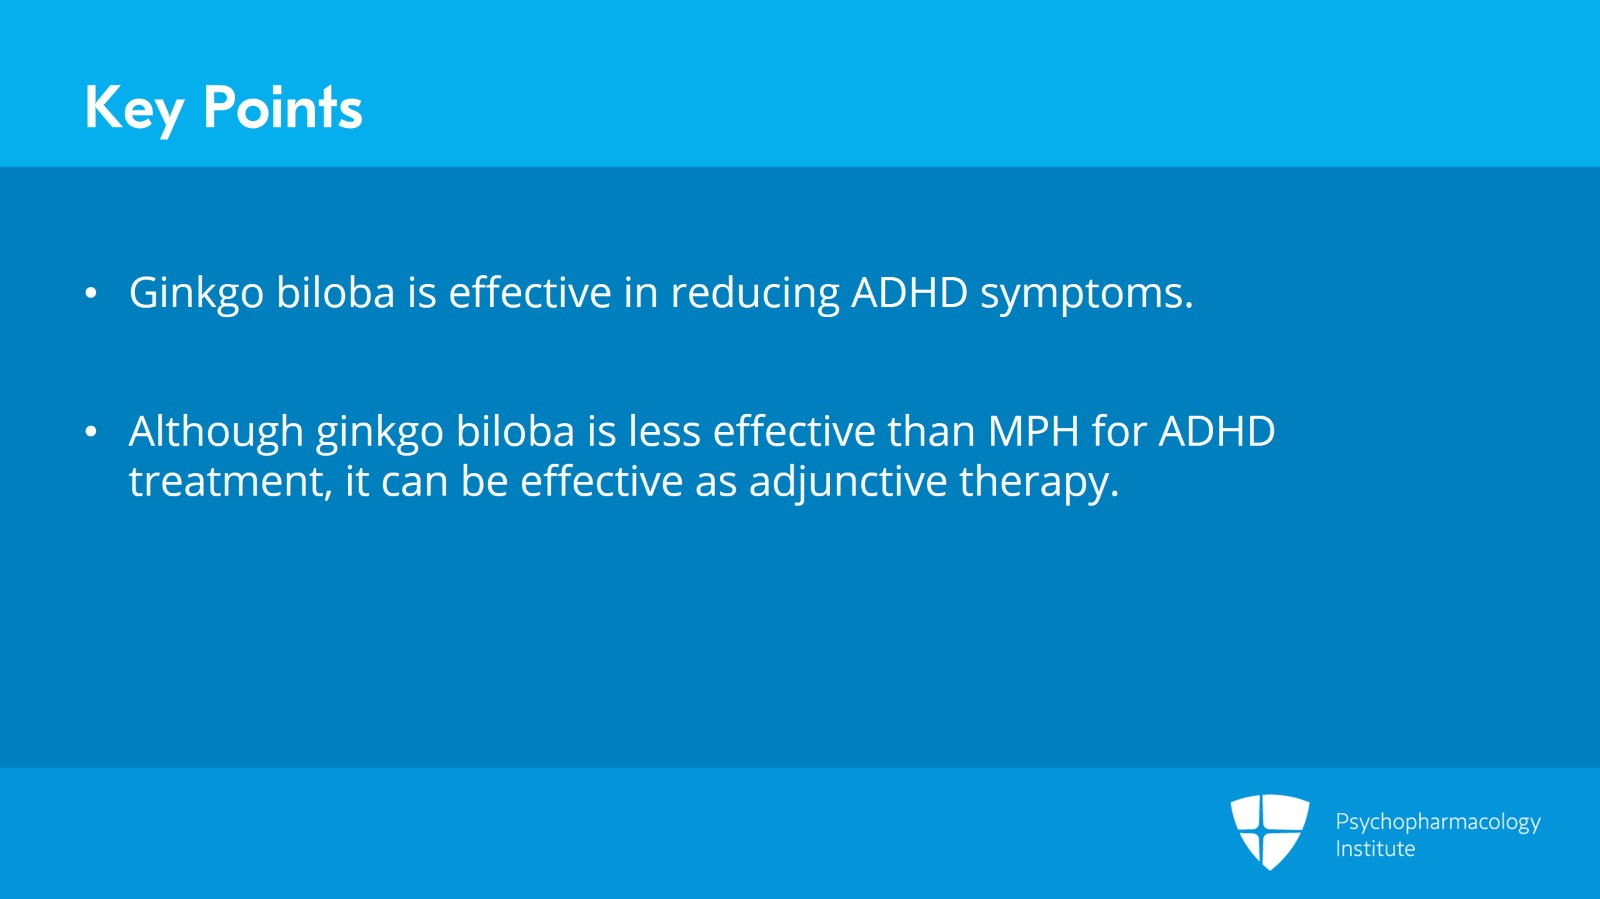 12 Benefits of Ginkgo Biloba (Plus Side Effects & Dosage)